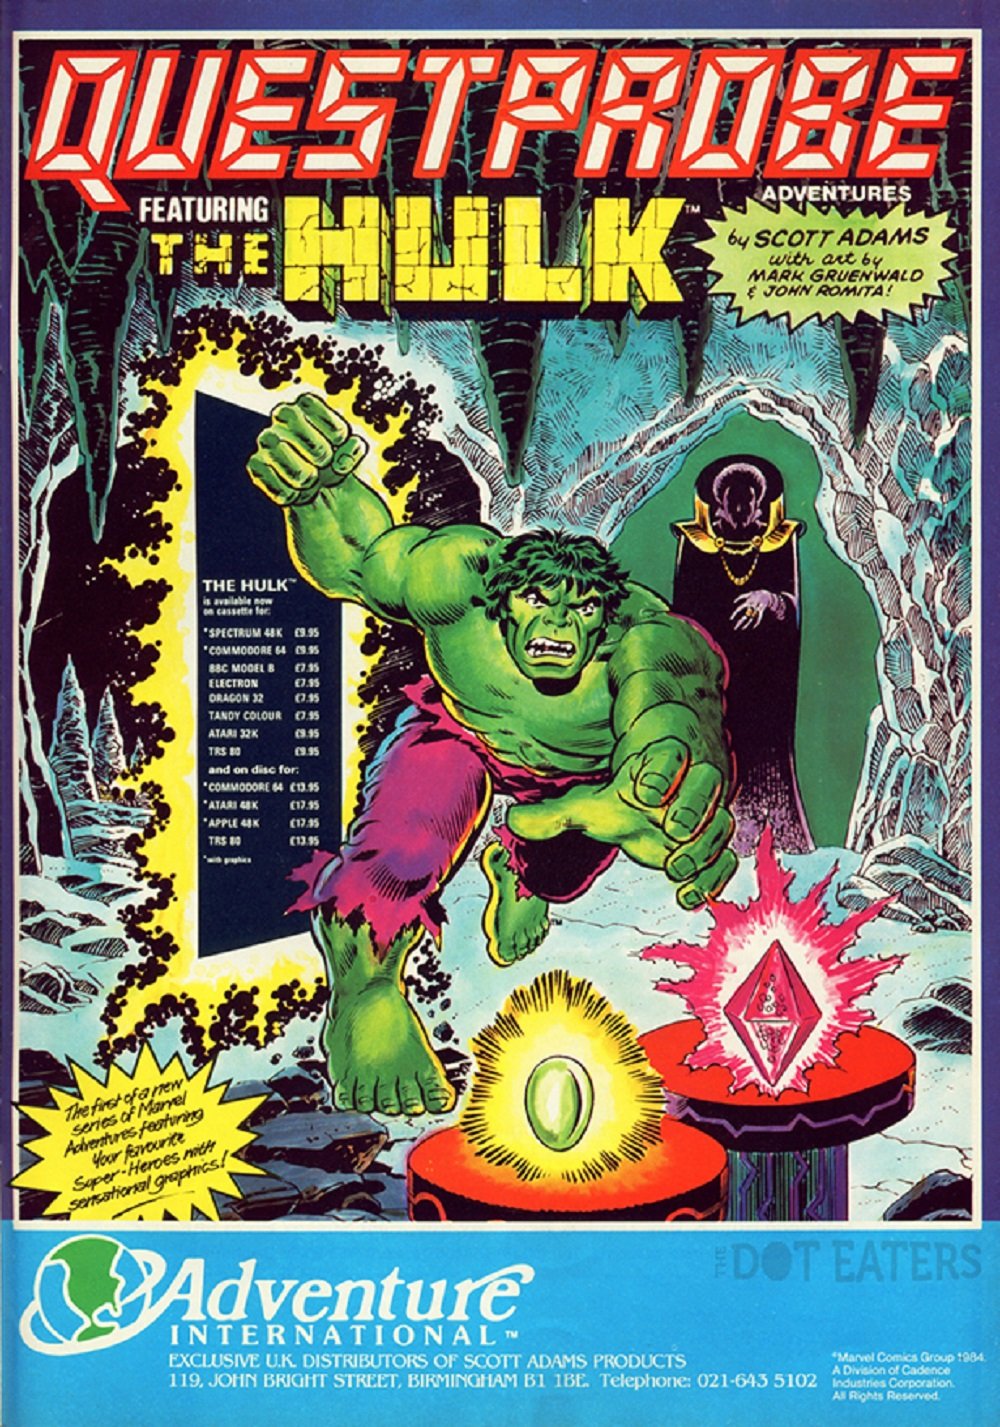 Image of Questprobe featuring The Hulk